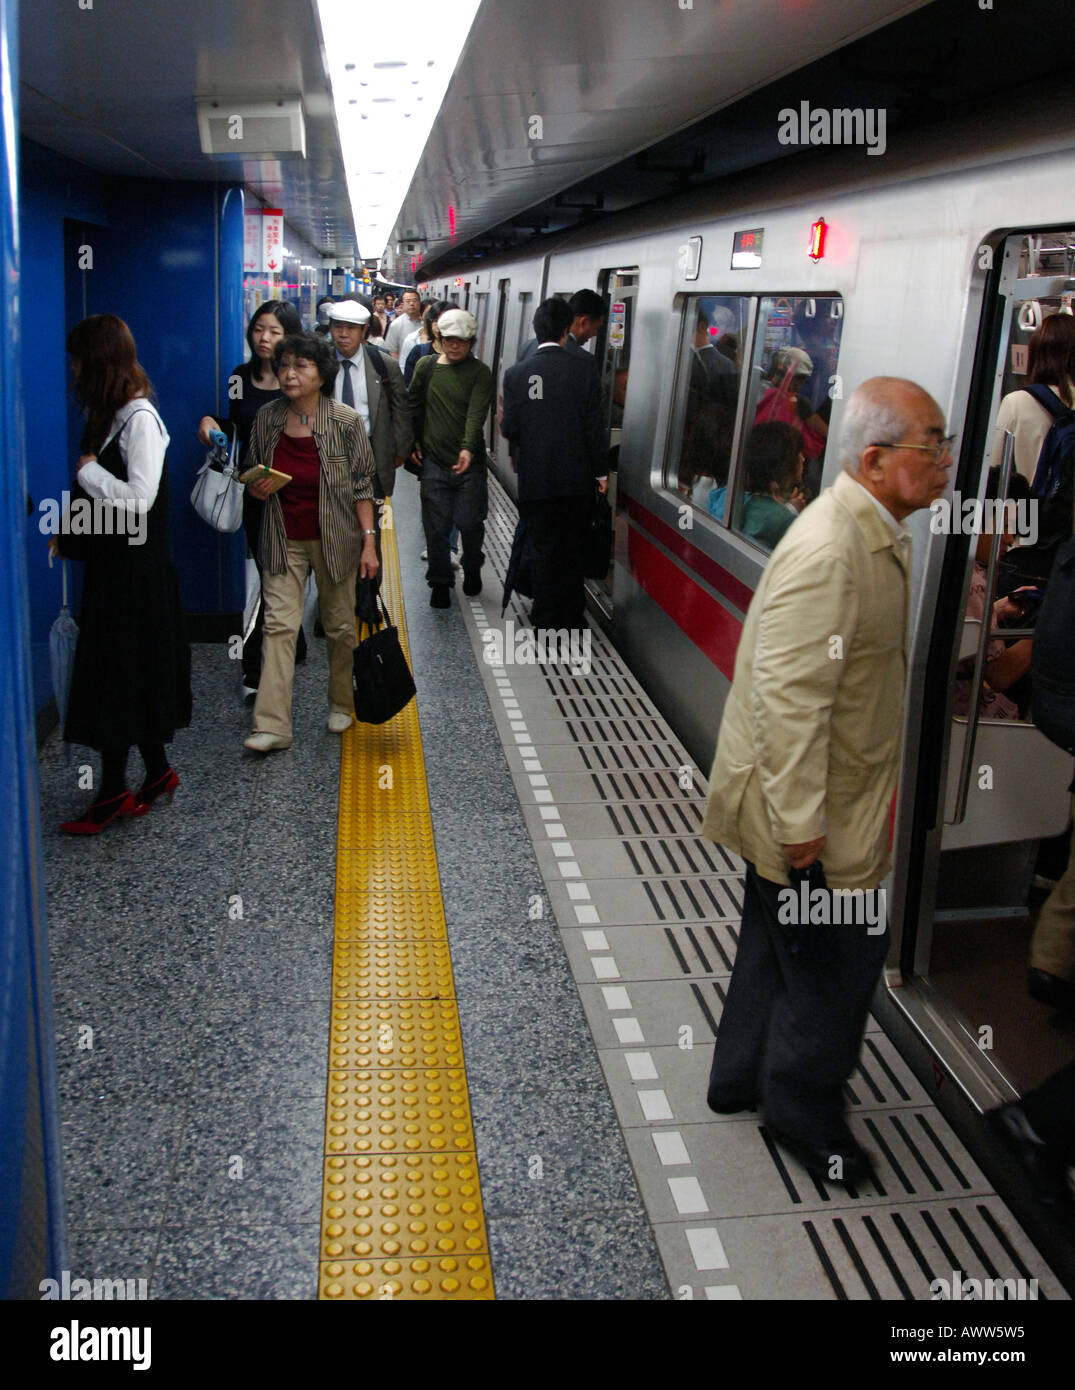 Commuters boarding a subway train, Tokyo Japan Stock Photo